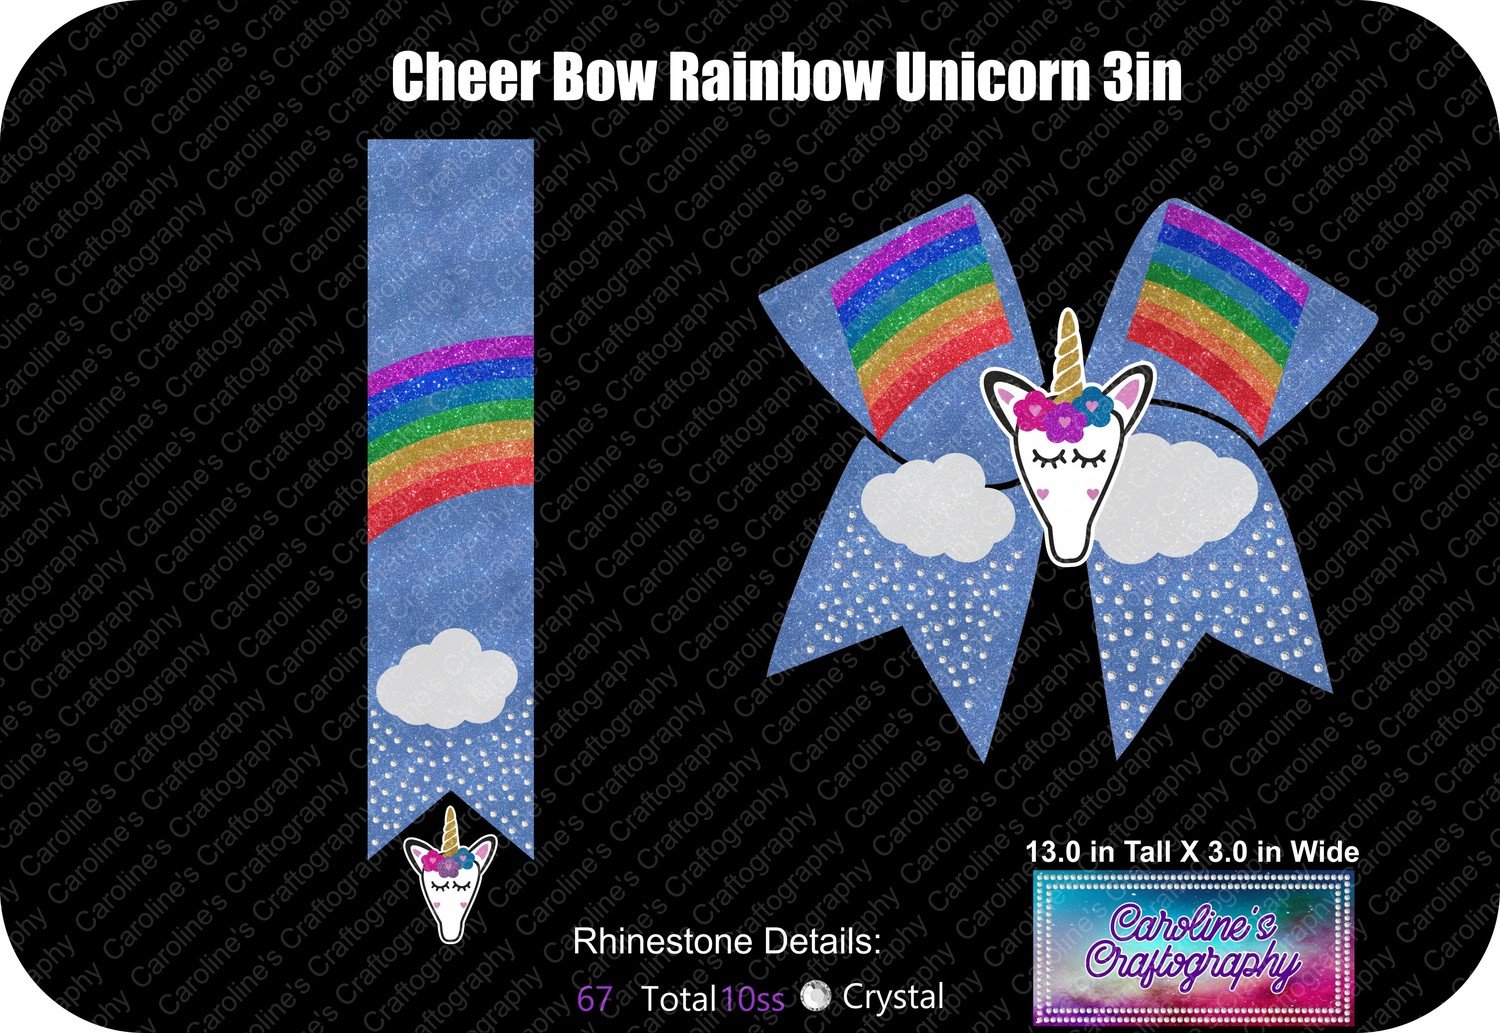 Cheer Bow Rainbow Stone Vinyl with 3D Unicorn Center 3 inch